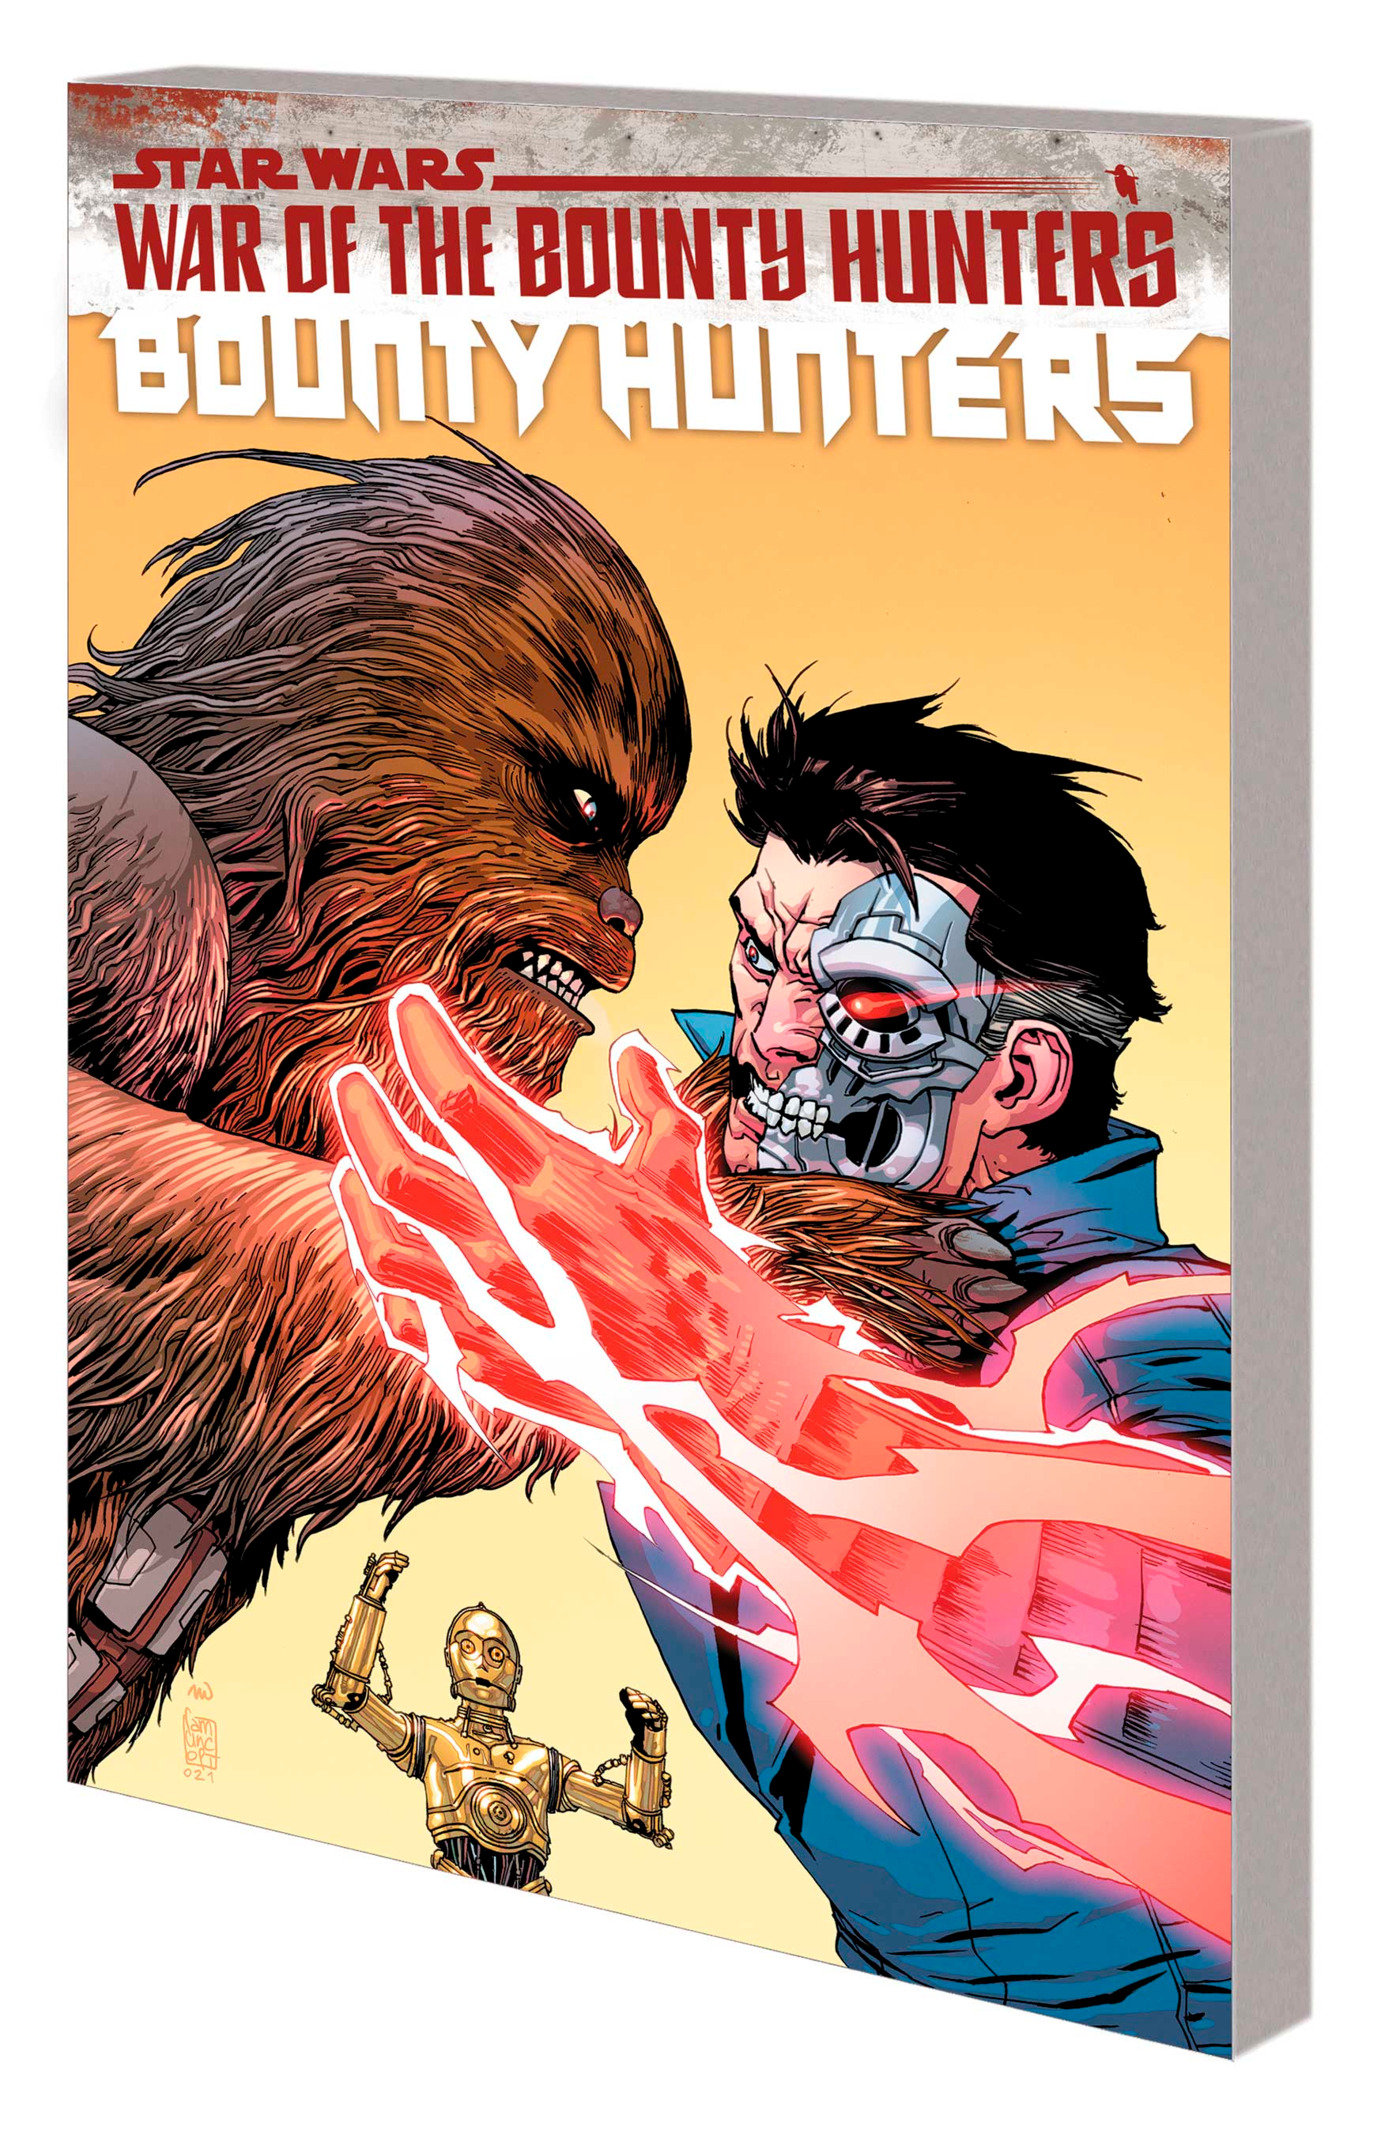 Star Wars: Bounty Hunters Graphic Novel Volume 3 War of the Bounty Hunters